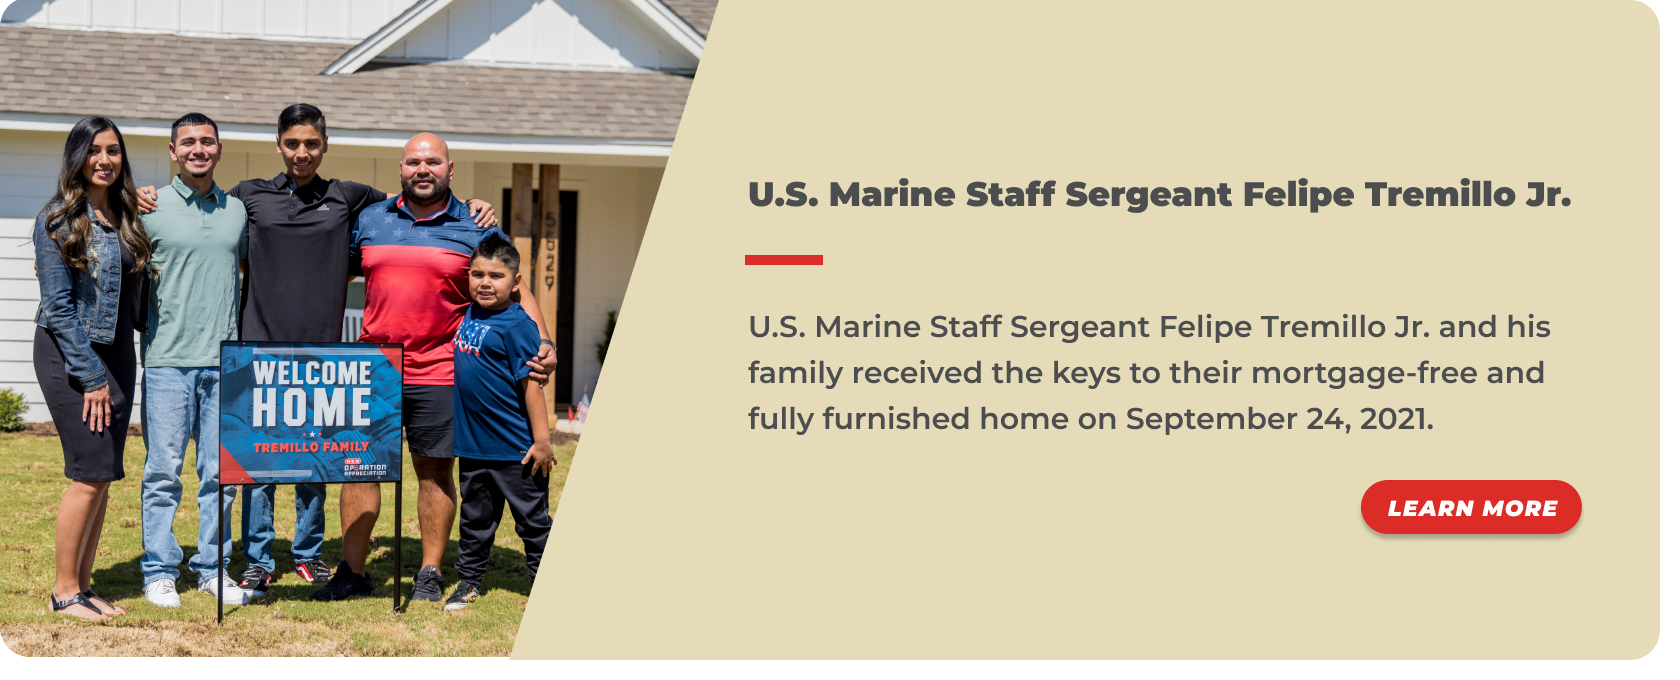 35 -U.S. Marine Staff Sergeant Felipe Tremillo Jr.